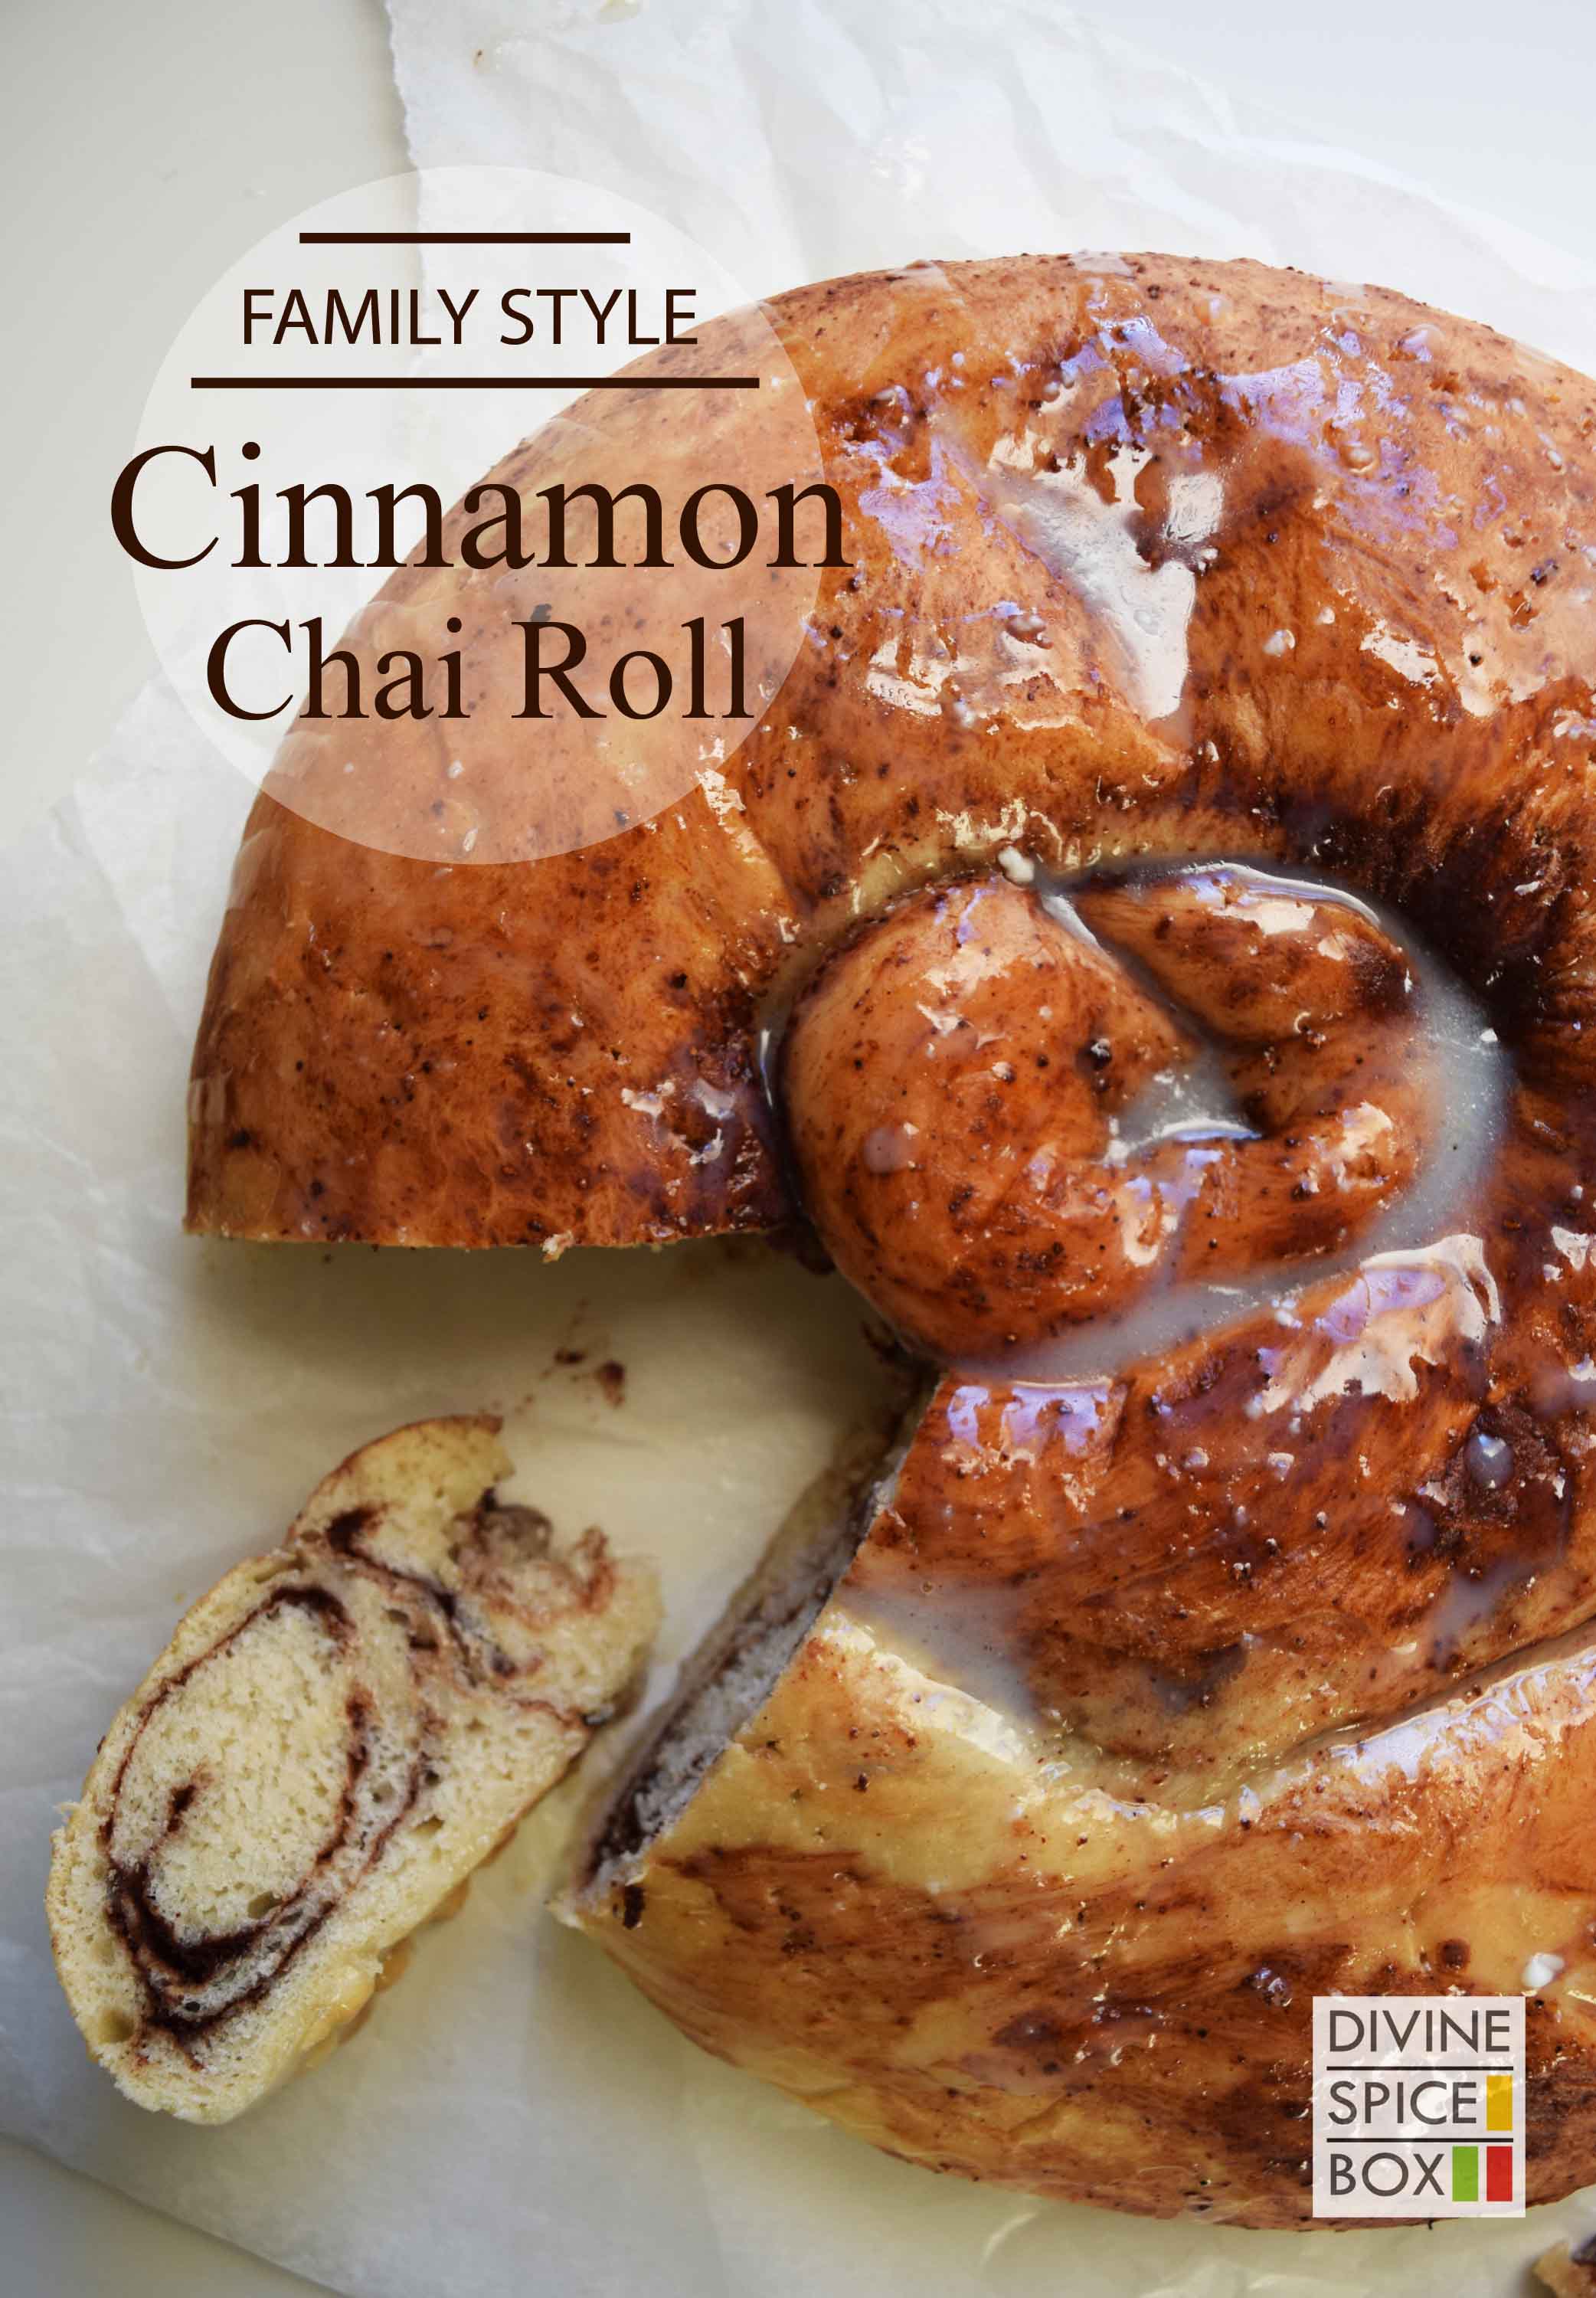 Cinnamon roll copy